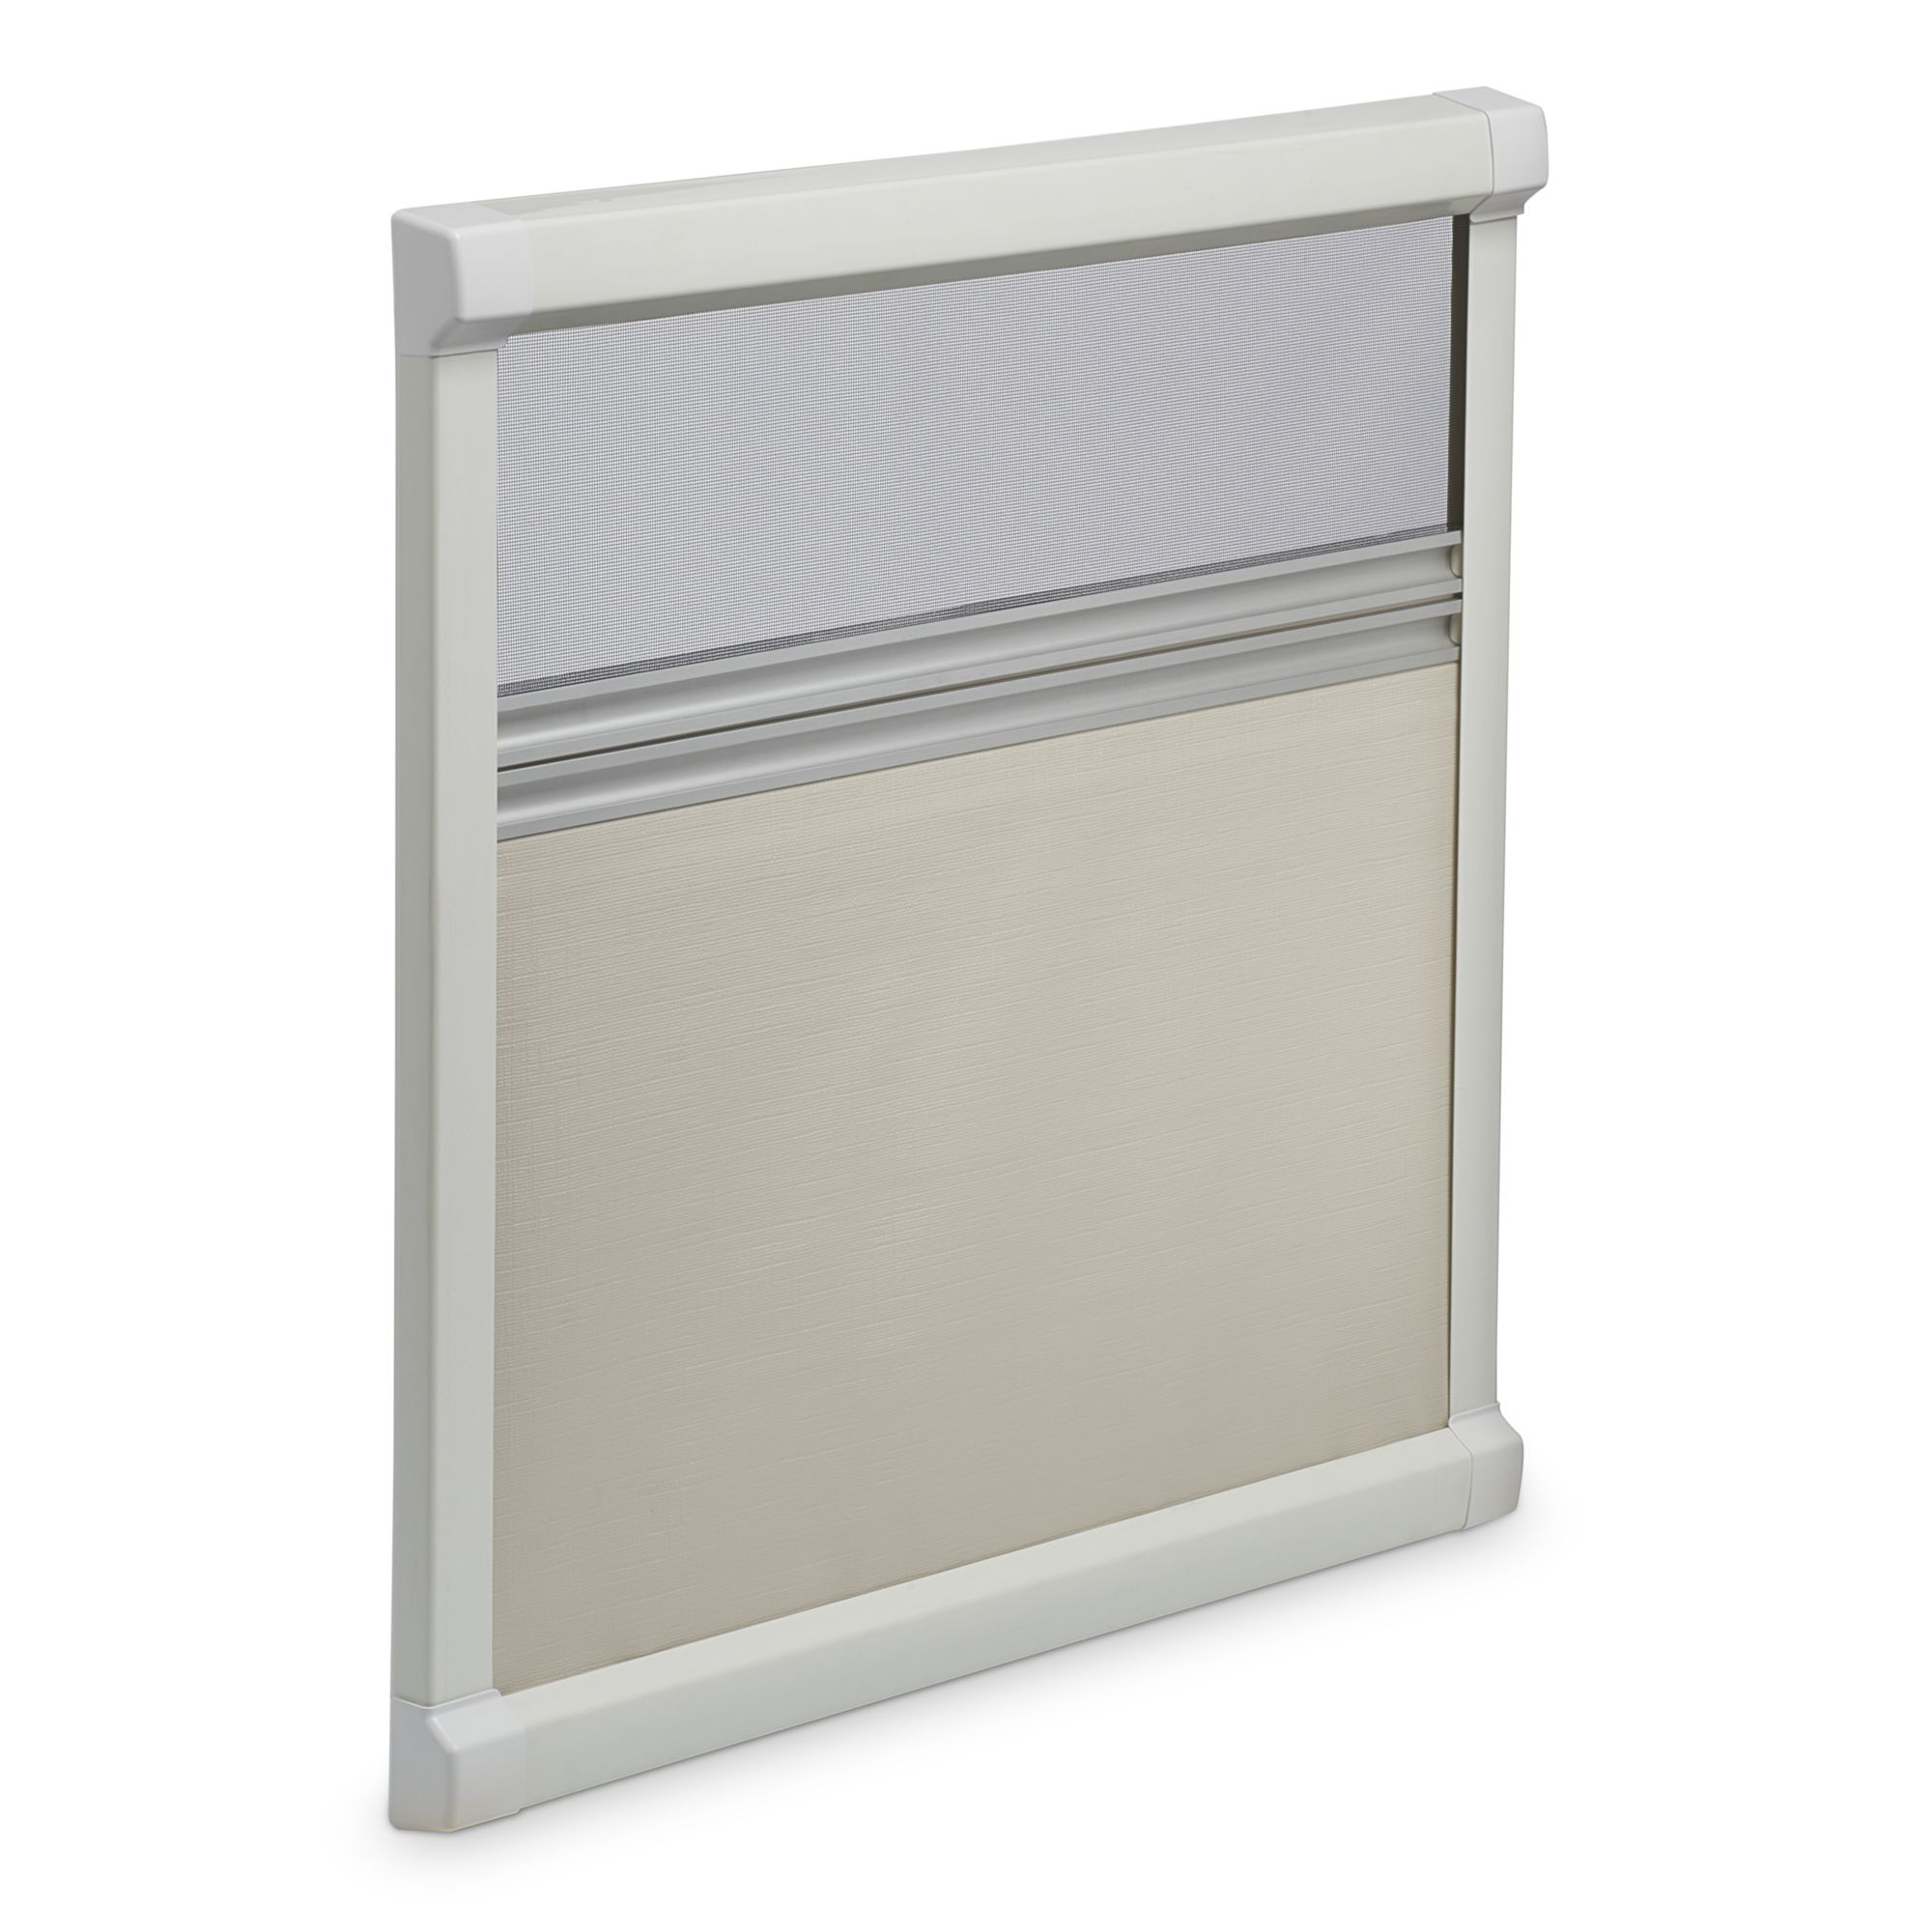 Dometic DB1R Window Roller Blind, 1180 x 330 mm, cream-white